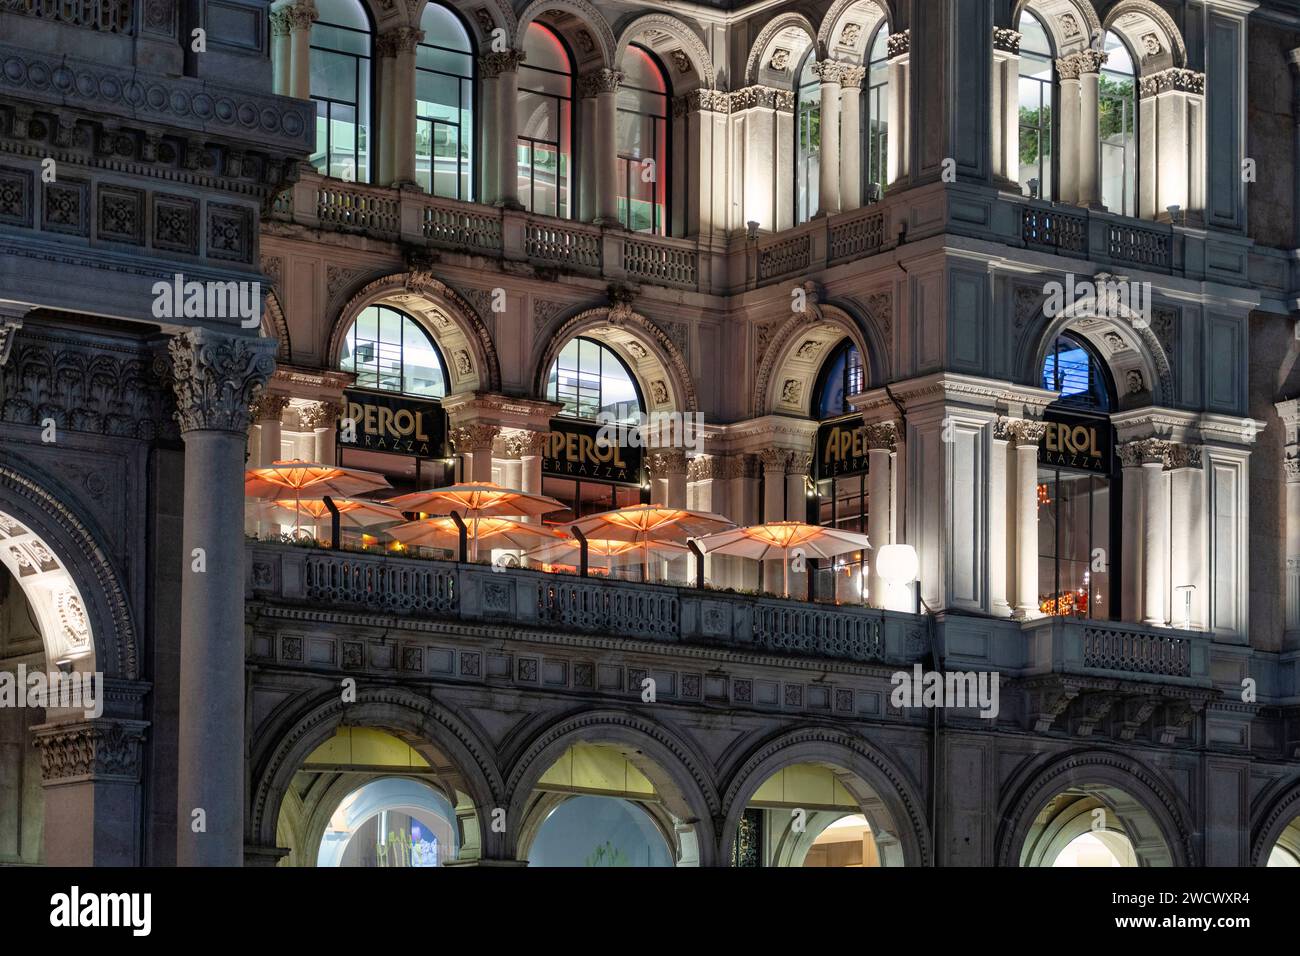 Italy, Lombardie, Milan, Dome Square, Galleria Vittorio Emanuele II prestigious historic shopping gallery in neoclassical style Stock Photo